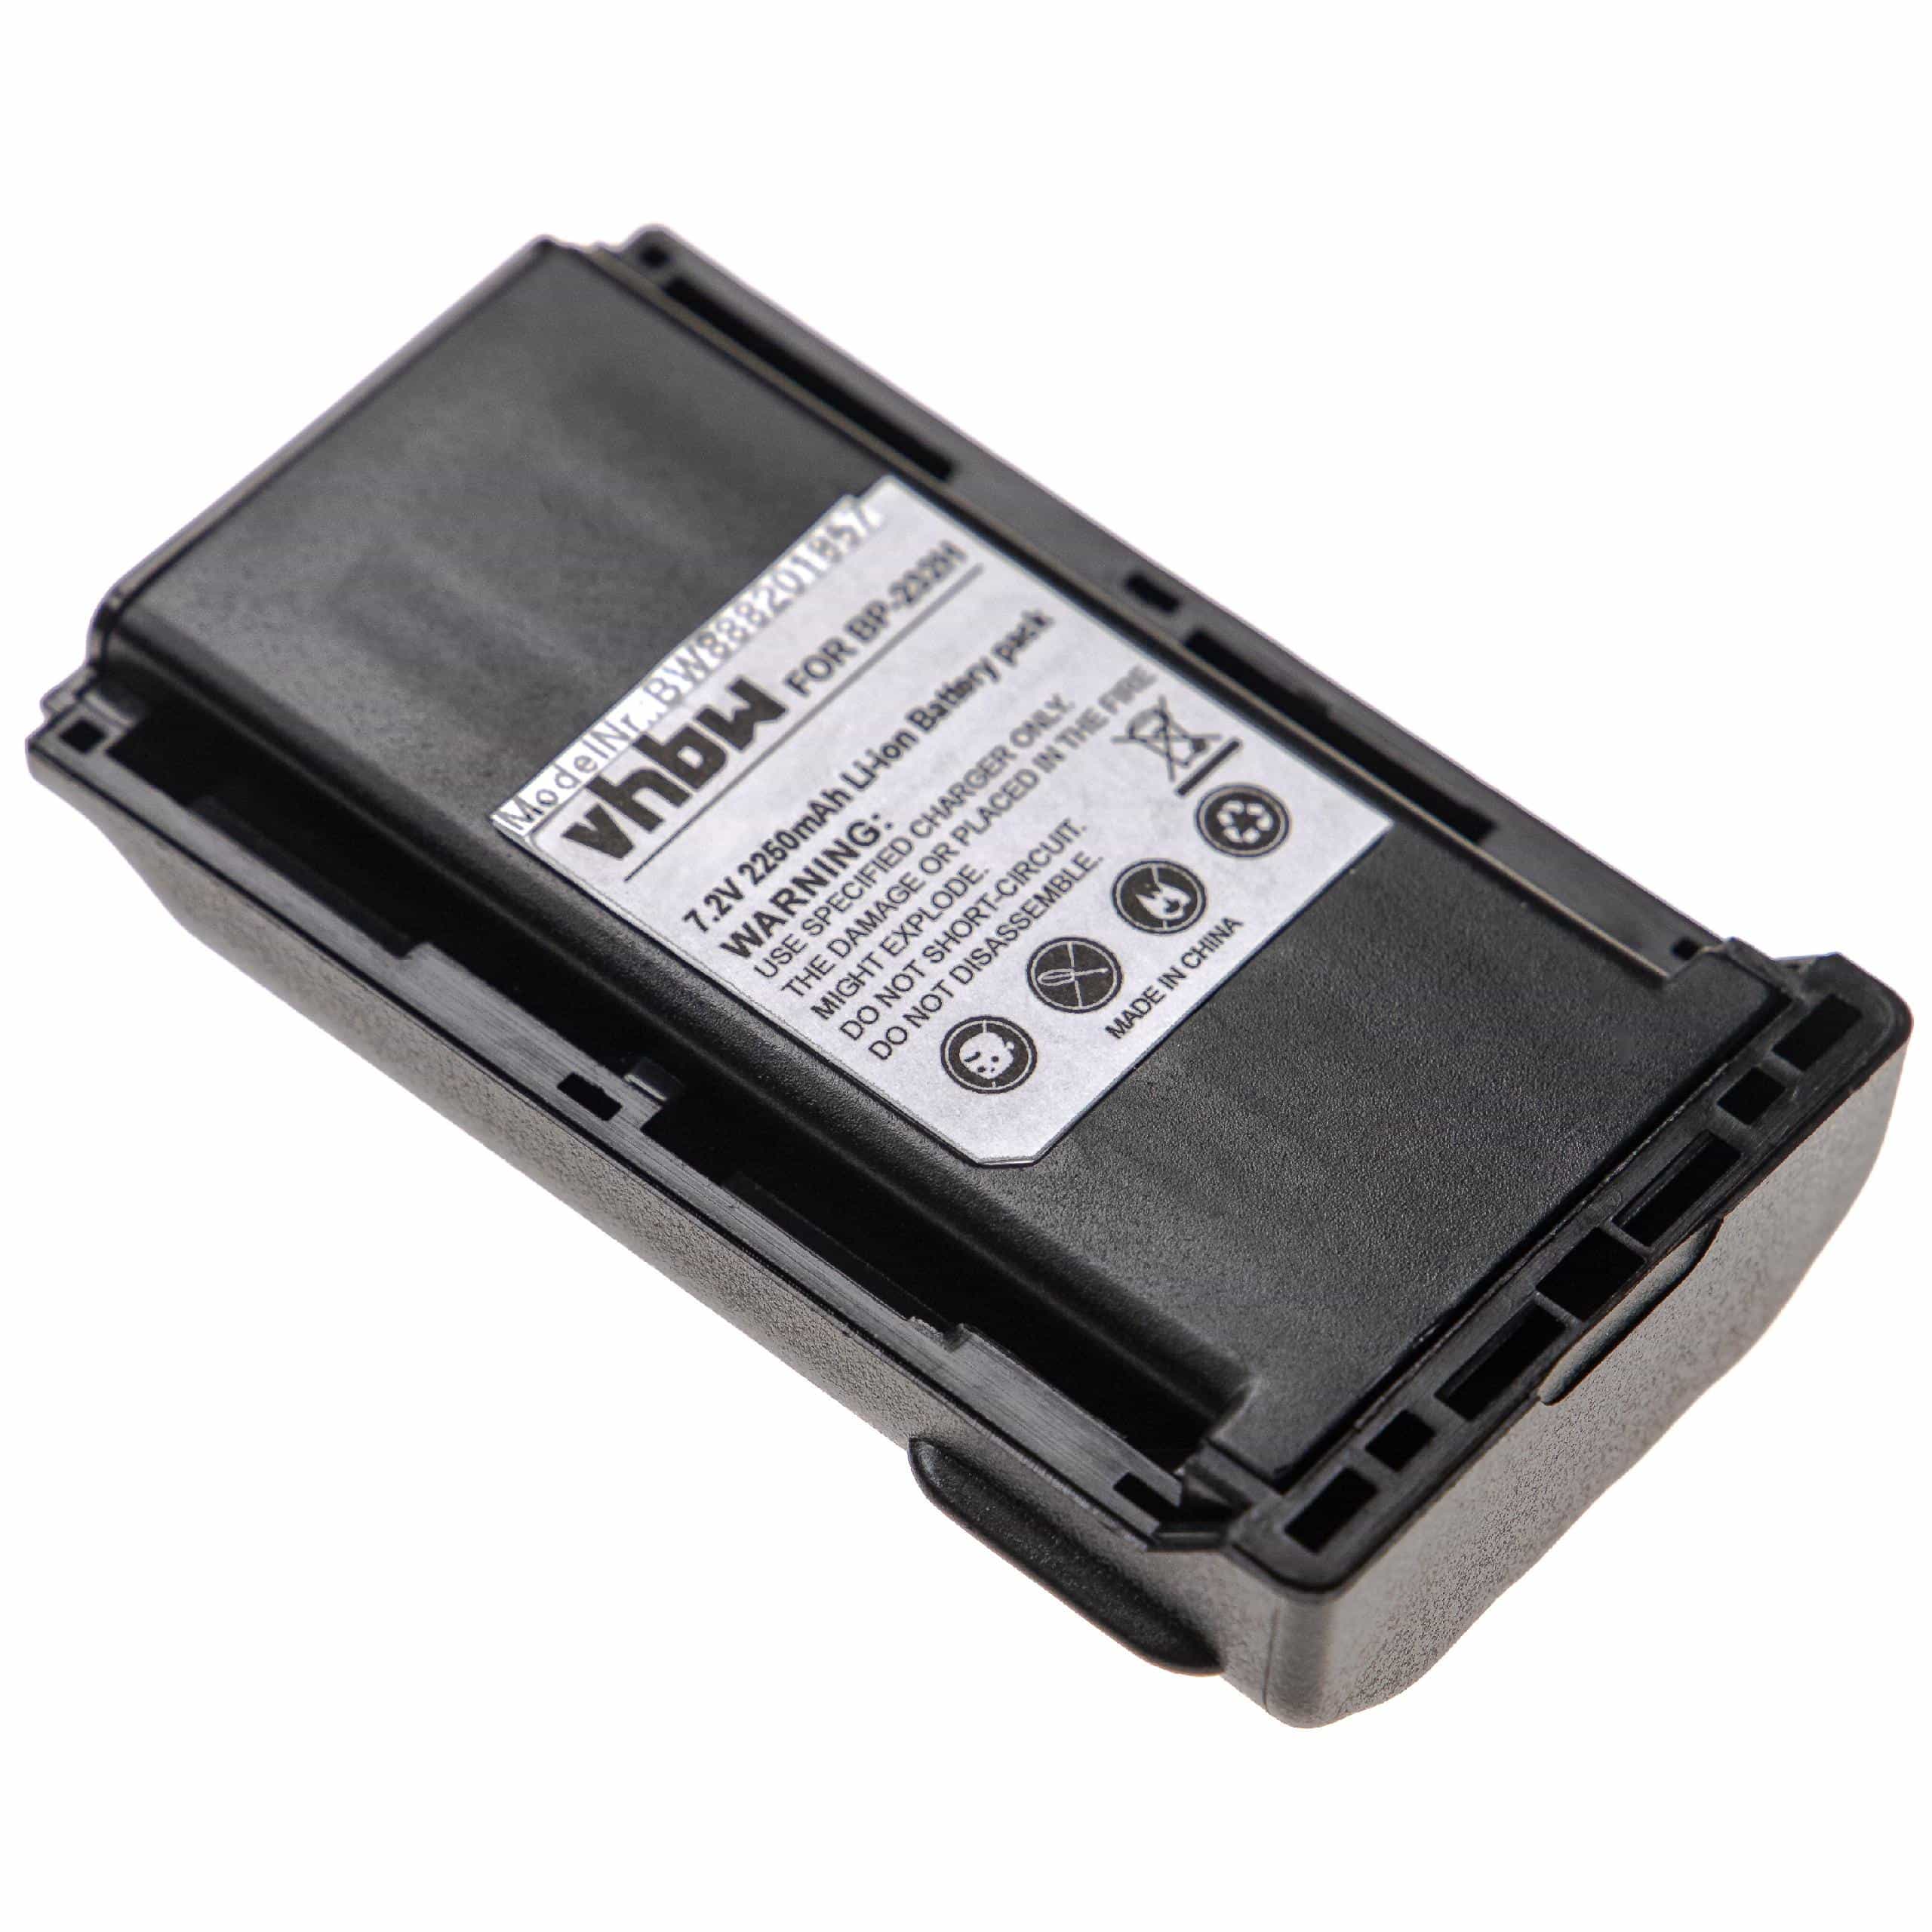 Batterie remplace Icom BJ-2000, BP-231, BP-230, BP-230N pour radio talkie-walkie - 2250mAh 7,2V Li-ion